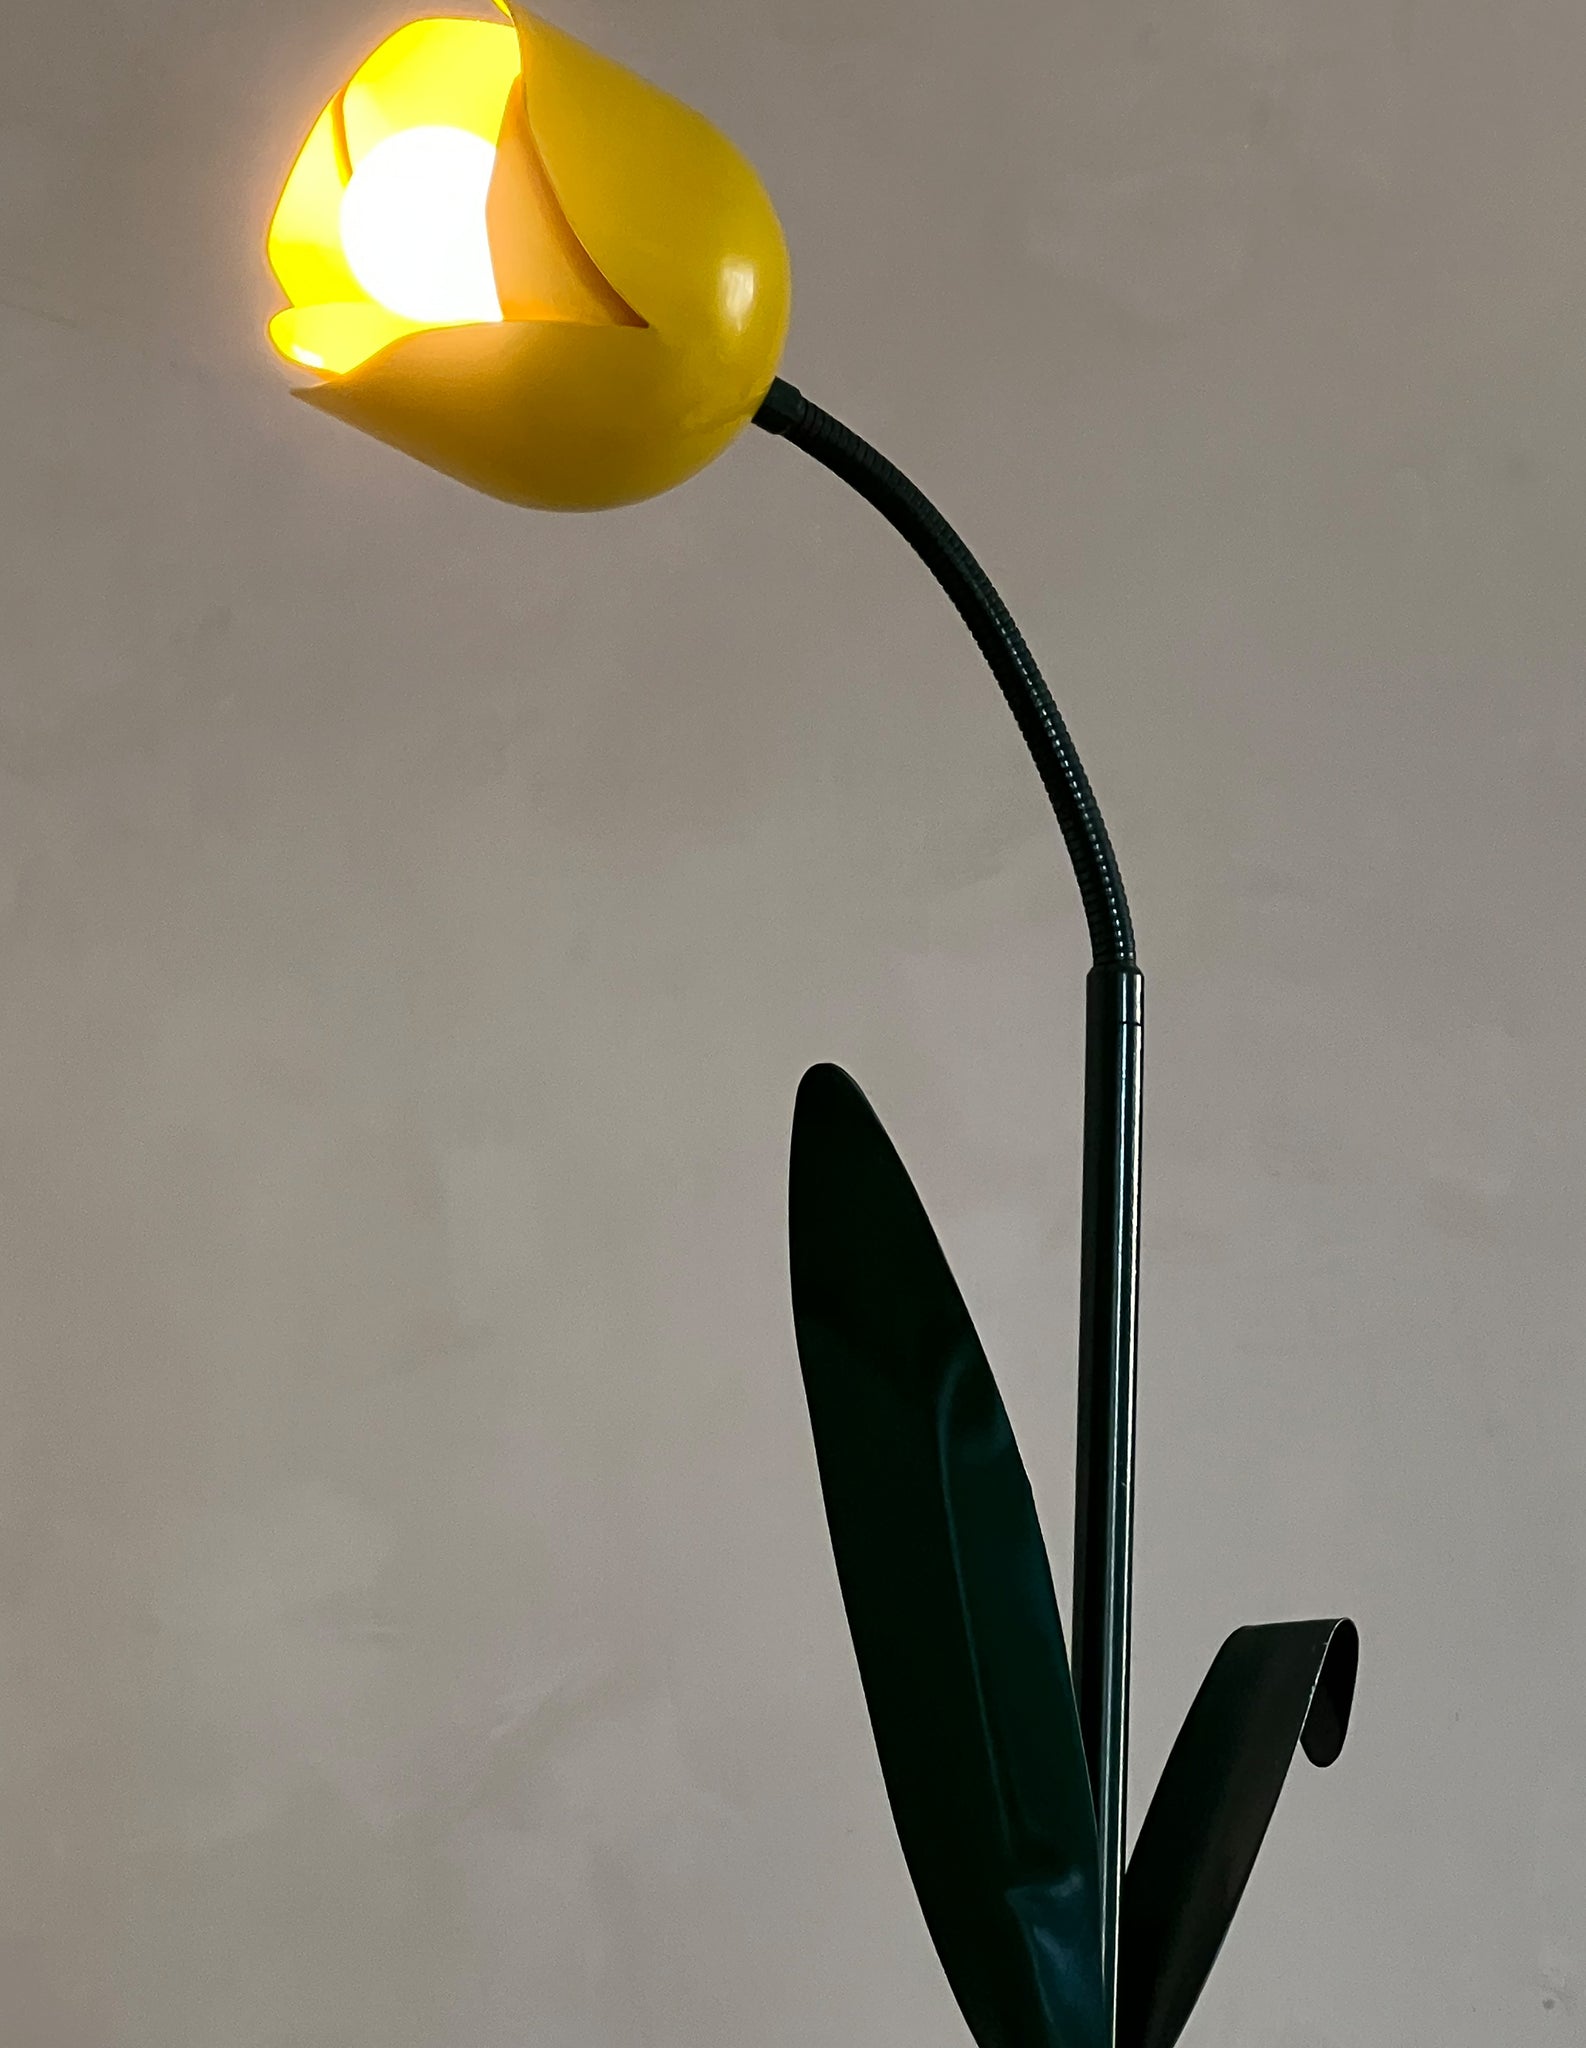 1980s Bliss Yellow Tulip Table Lamp